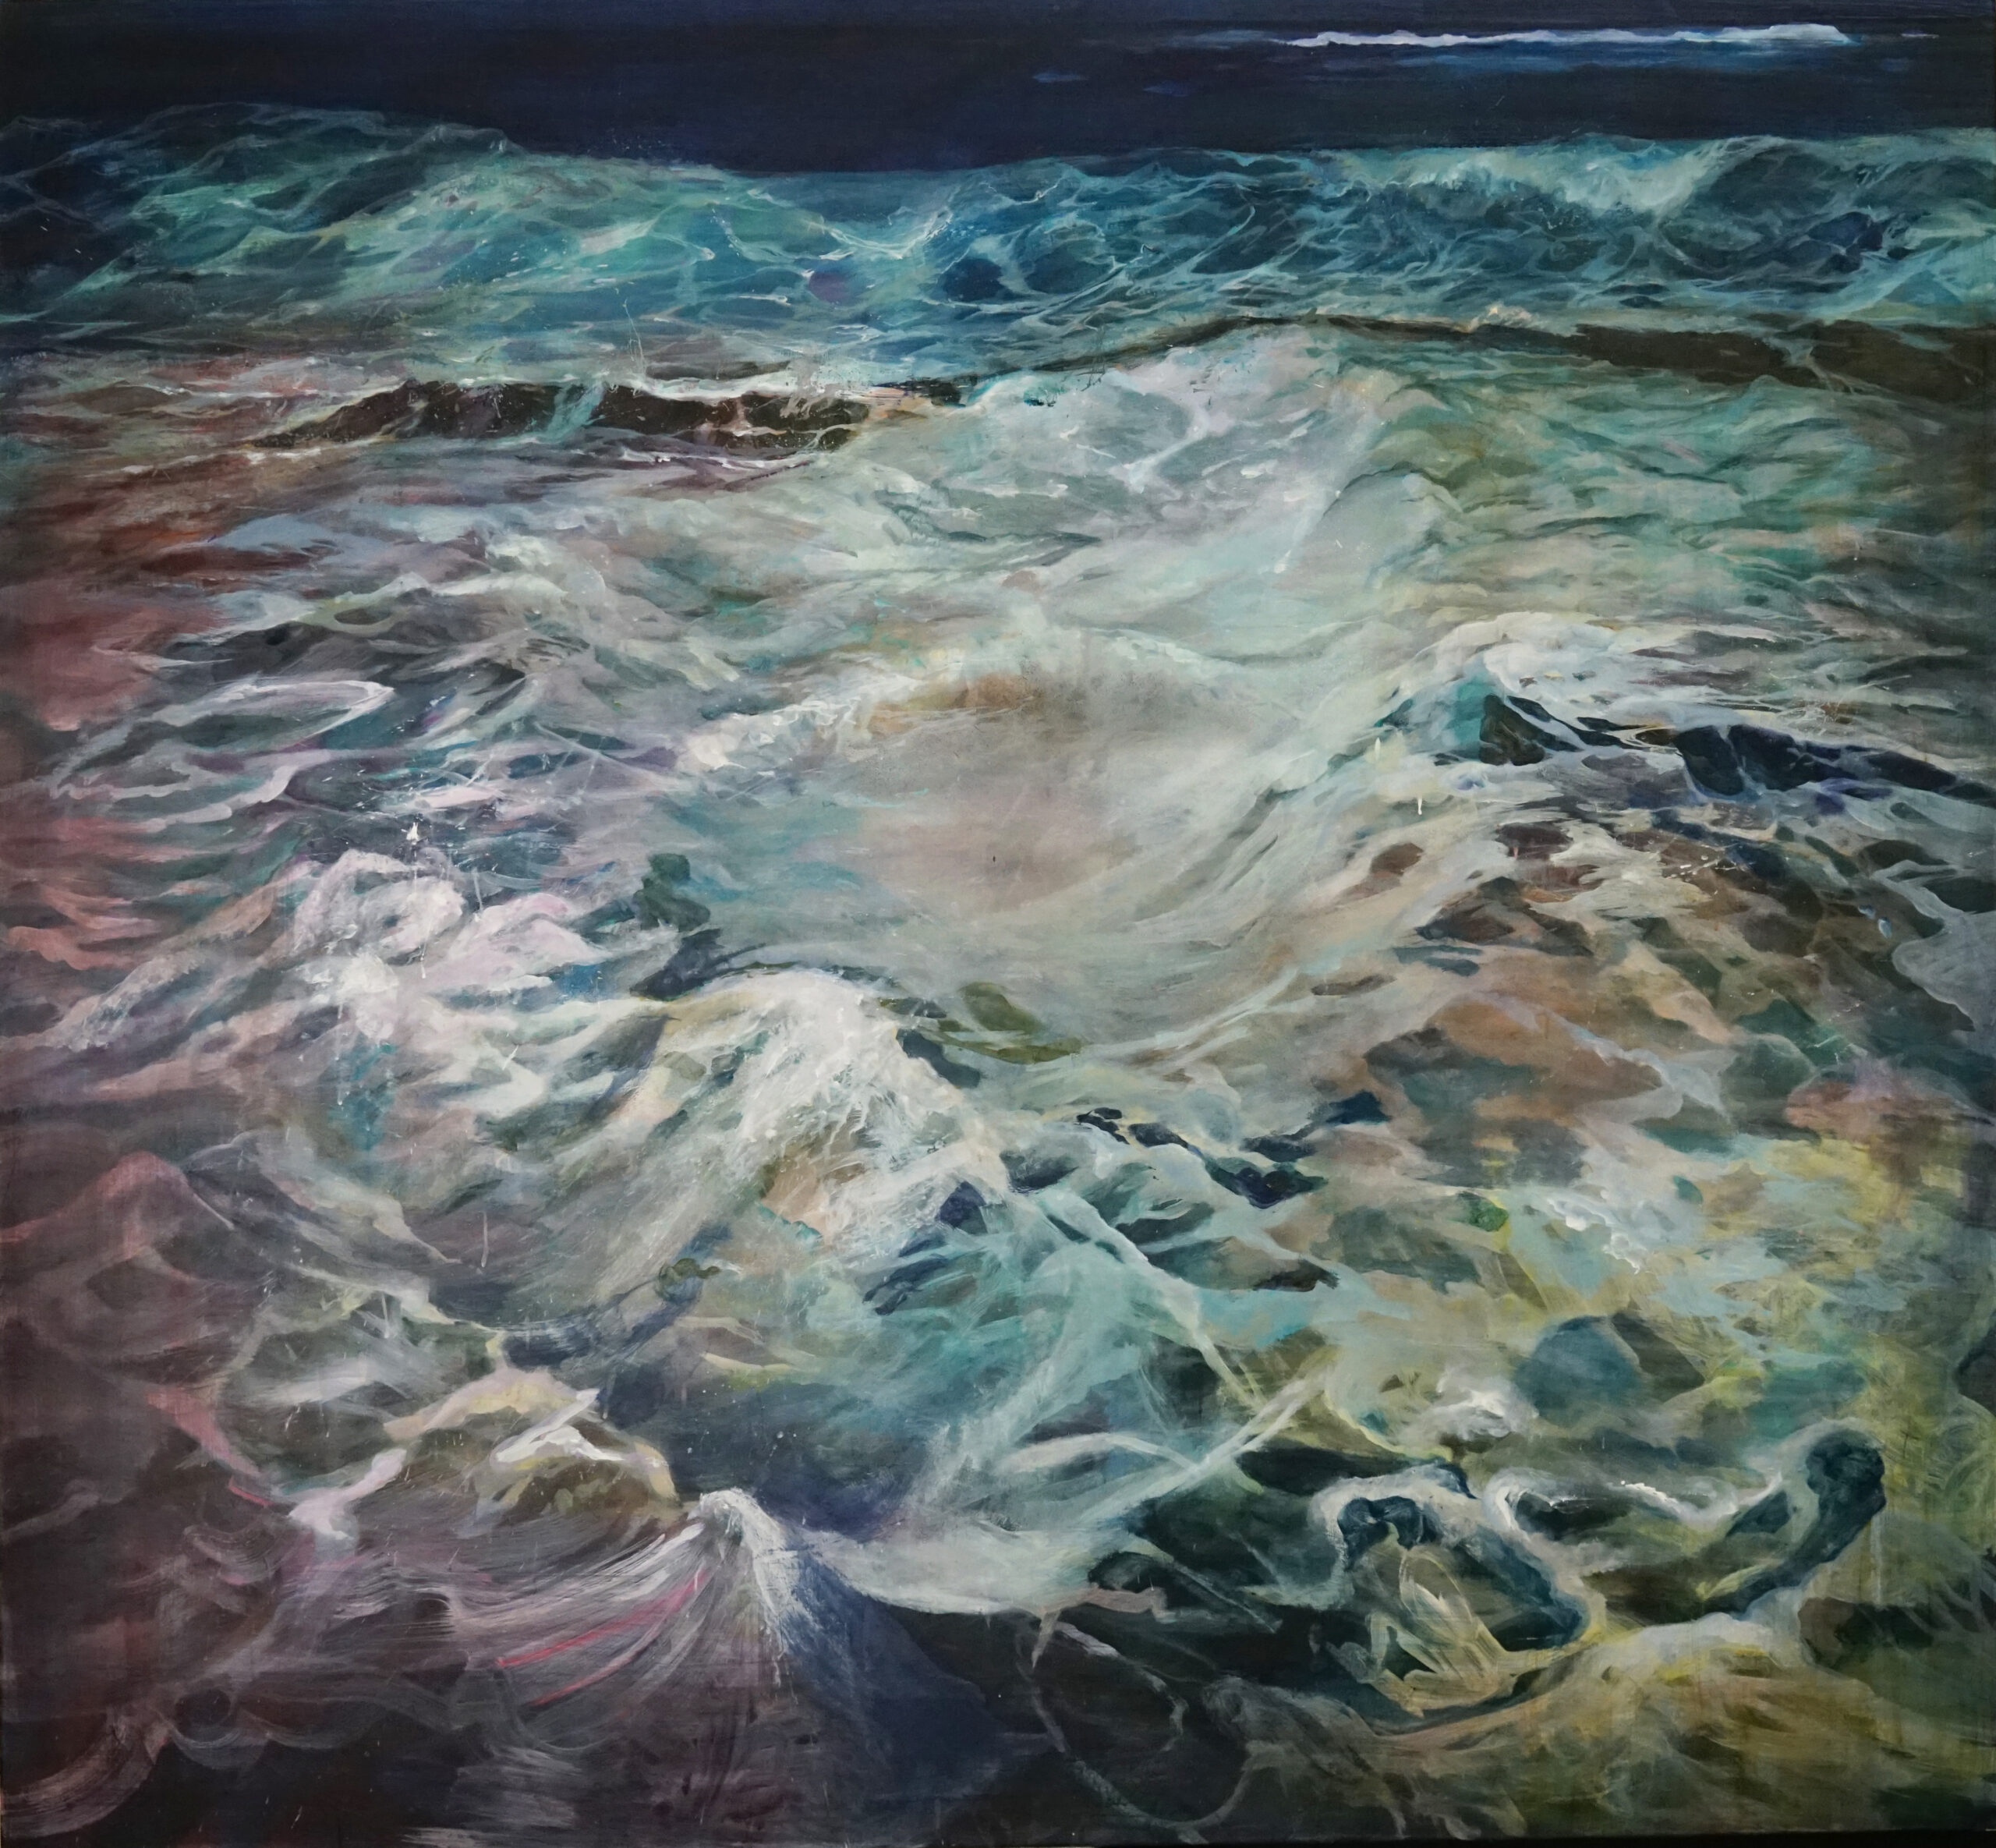 Soojie Kang - Das Meer (abstrakt) - 160 x 150cm - mixed media on canvas - 2020